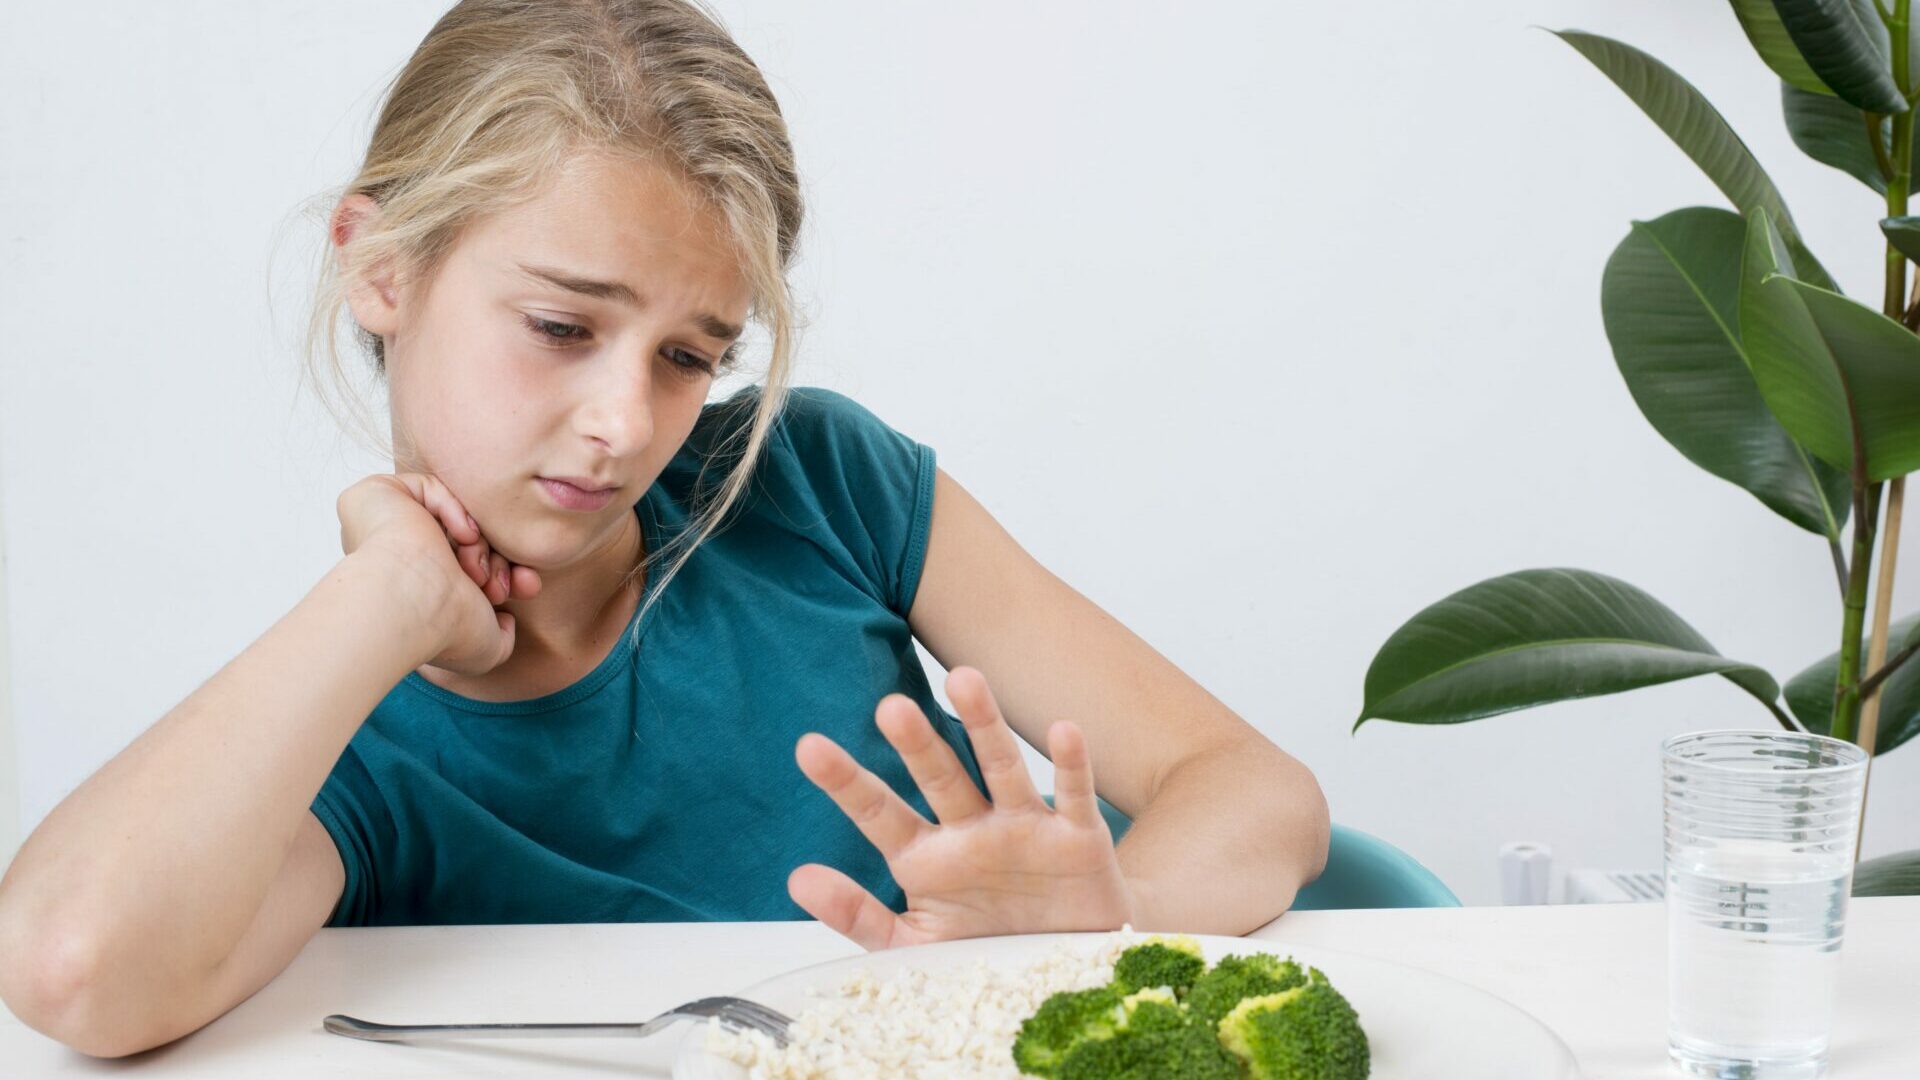  Rise in Teenage Girls' Eating Disorders